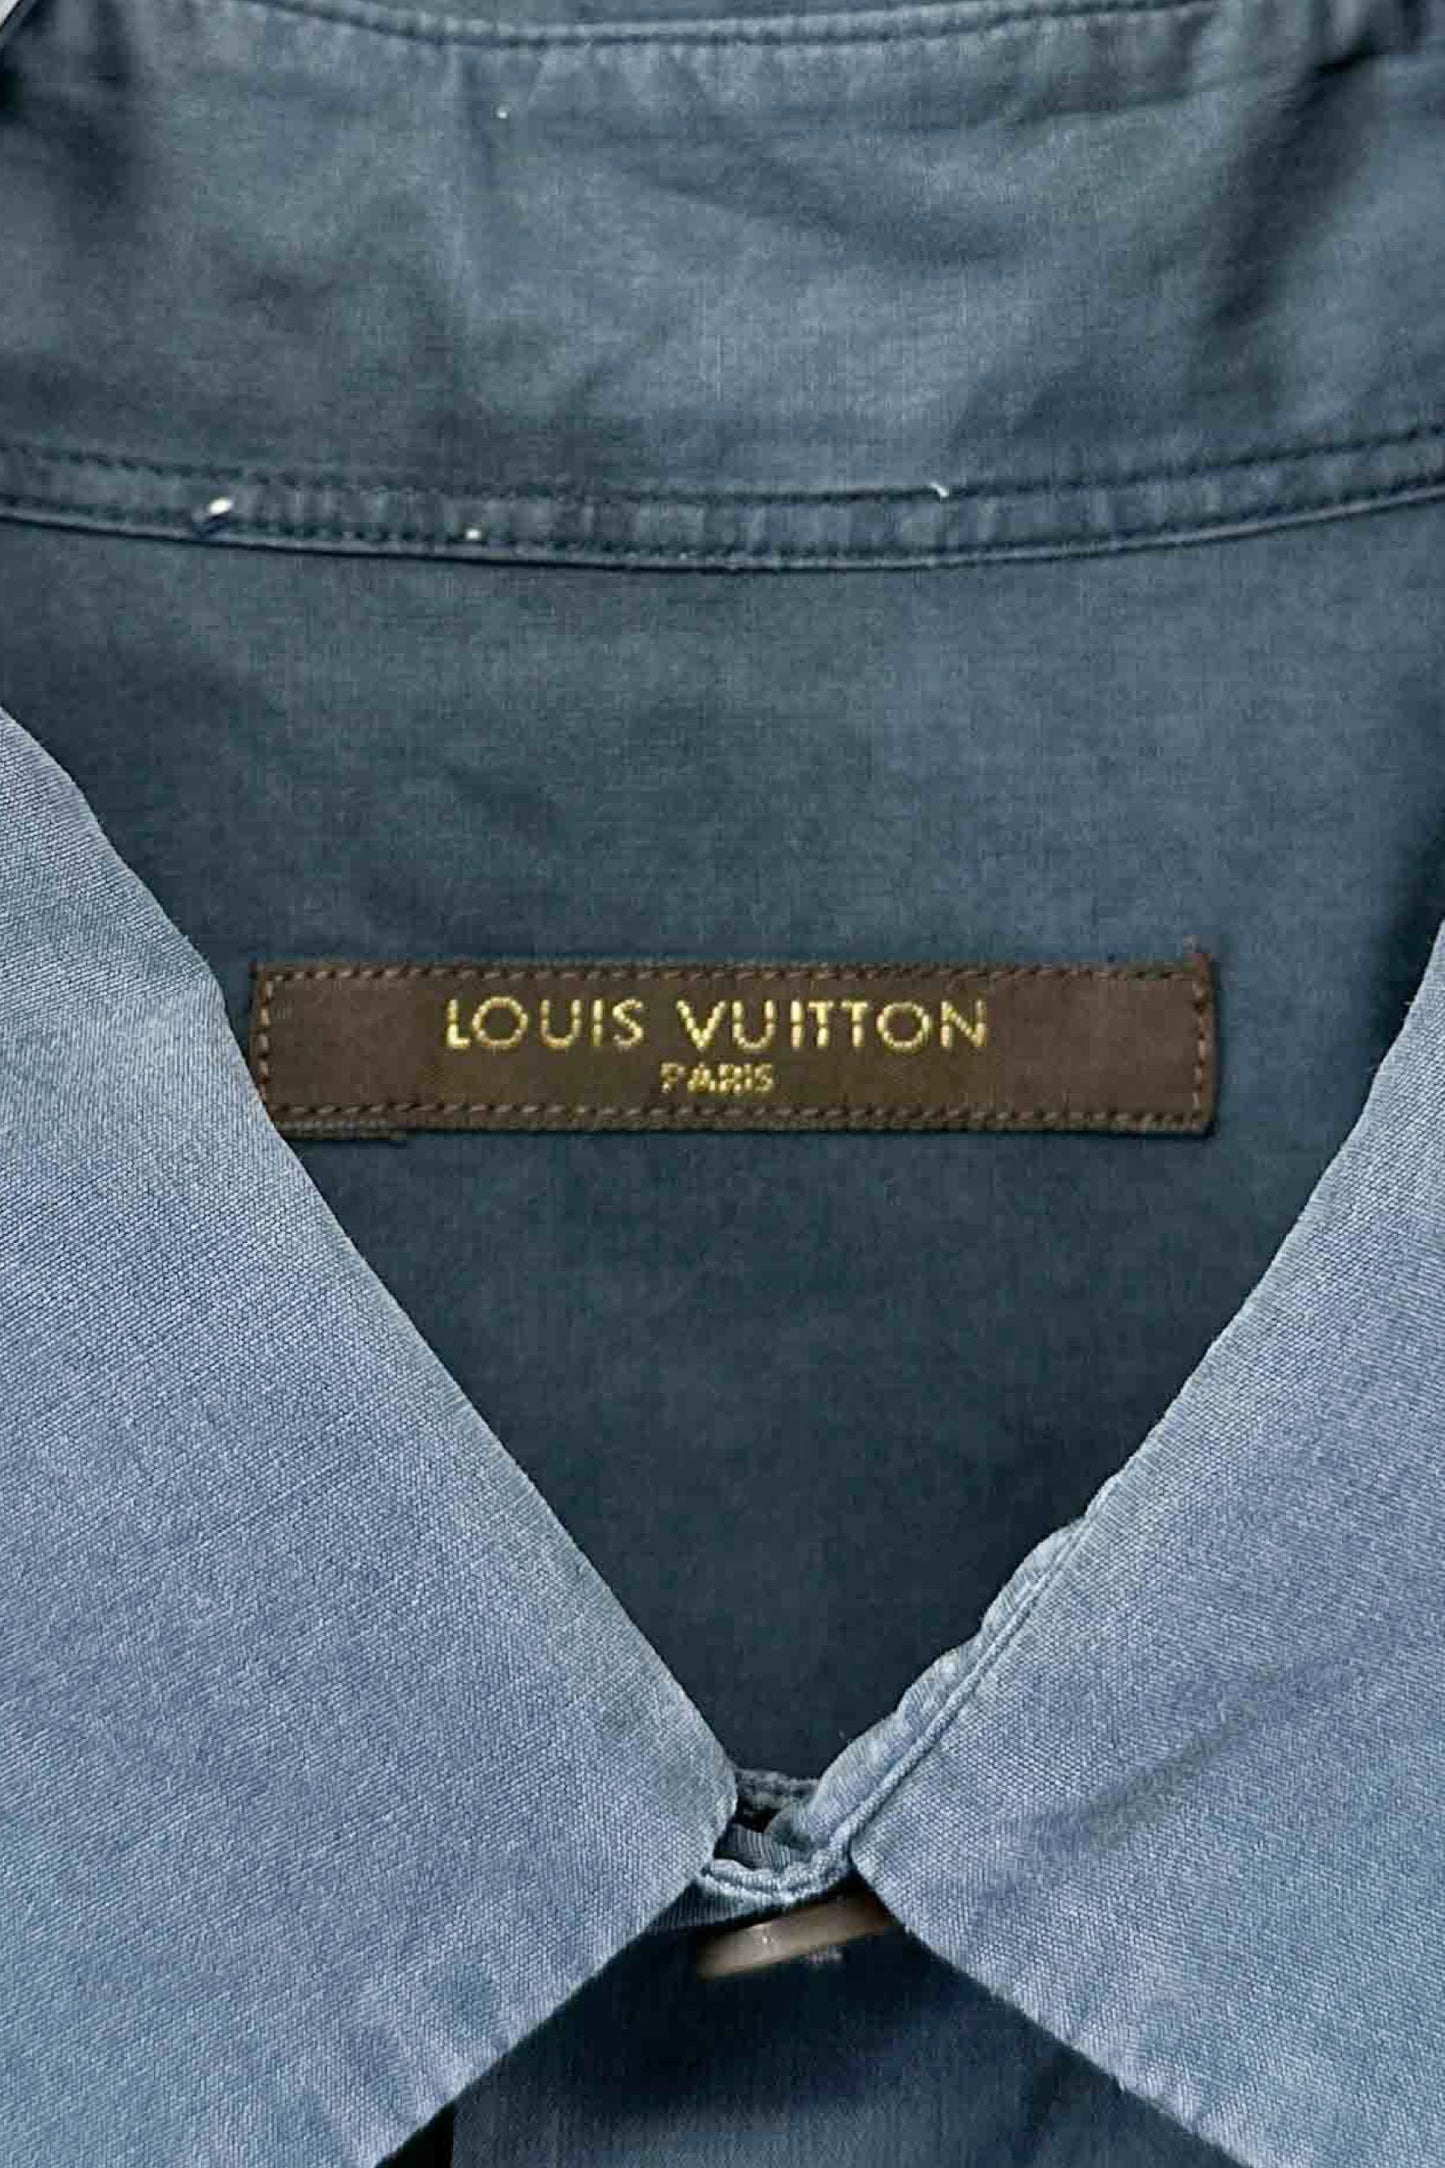 Made in FRANCE LOUIS VUITTON shirt